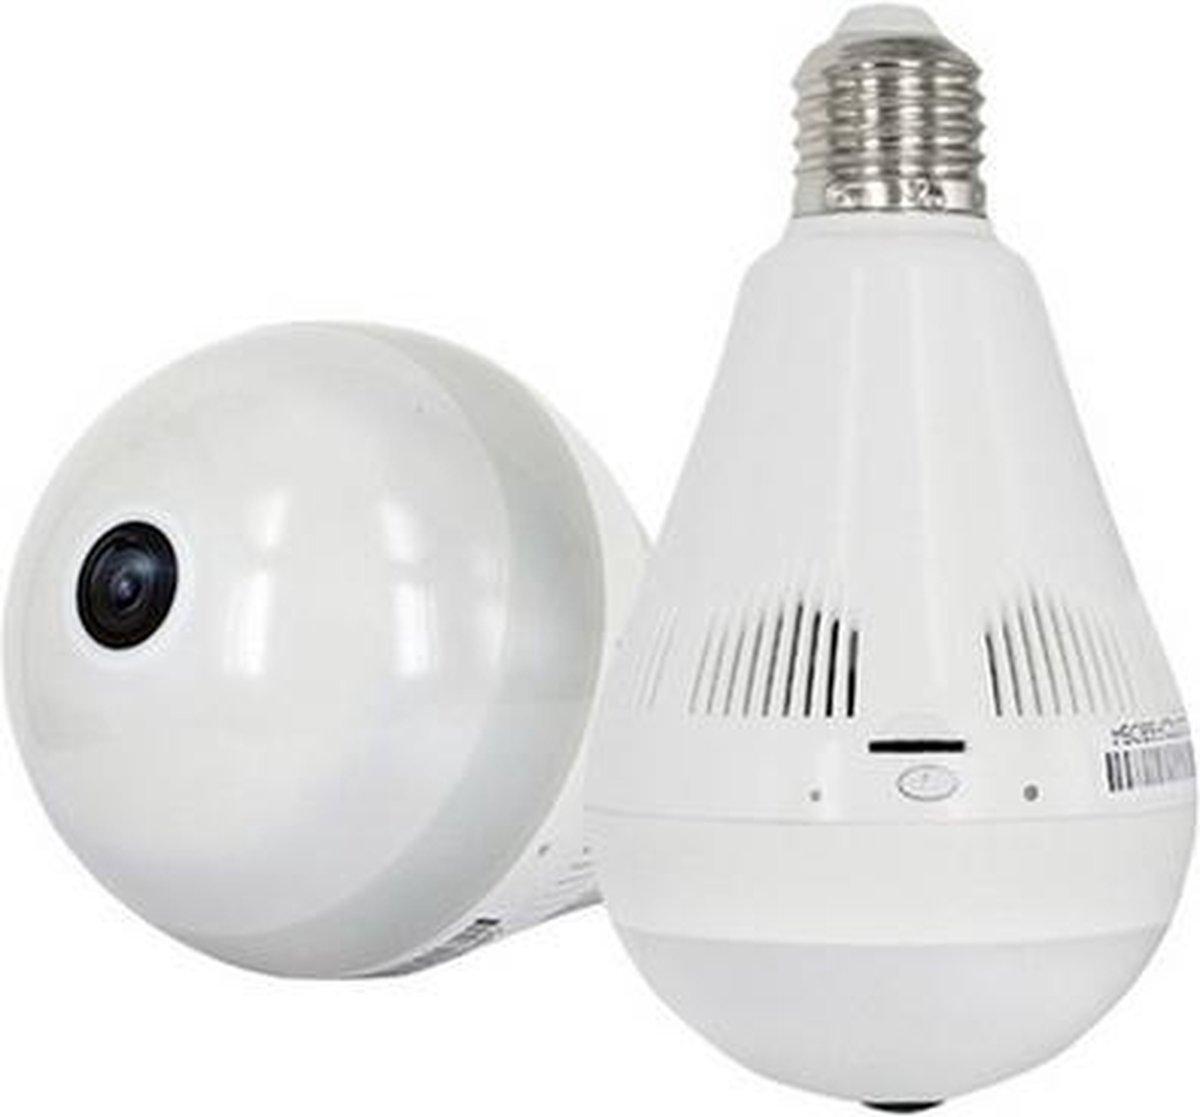 Lamp met verborgen camera, bewakingscamera spy | bol